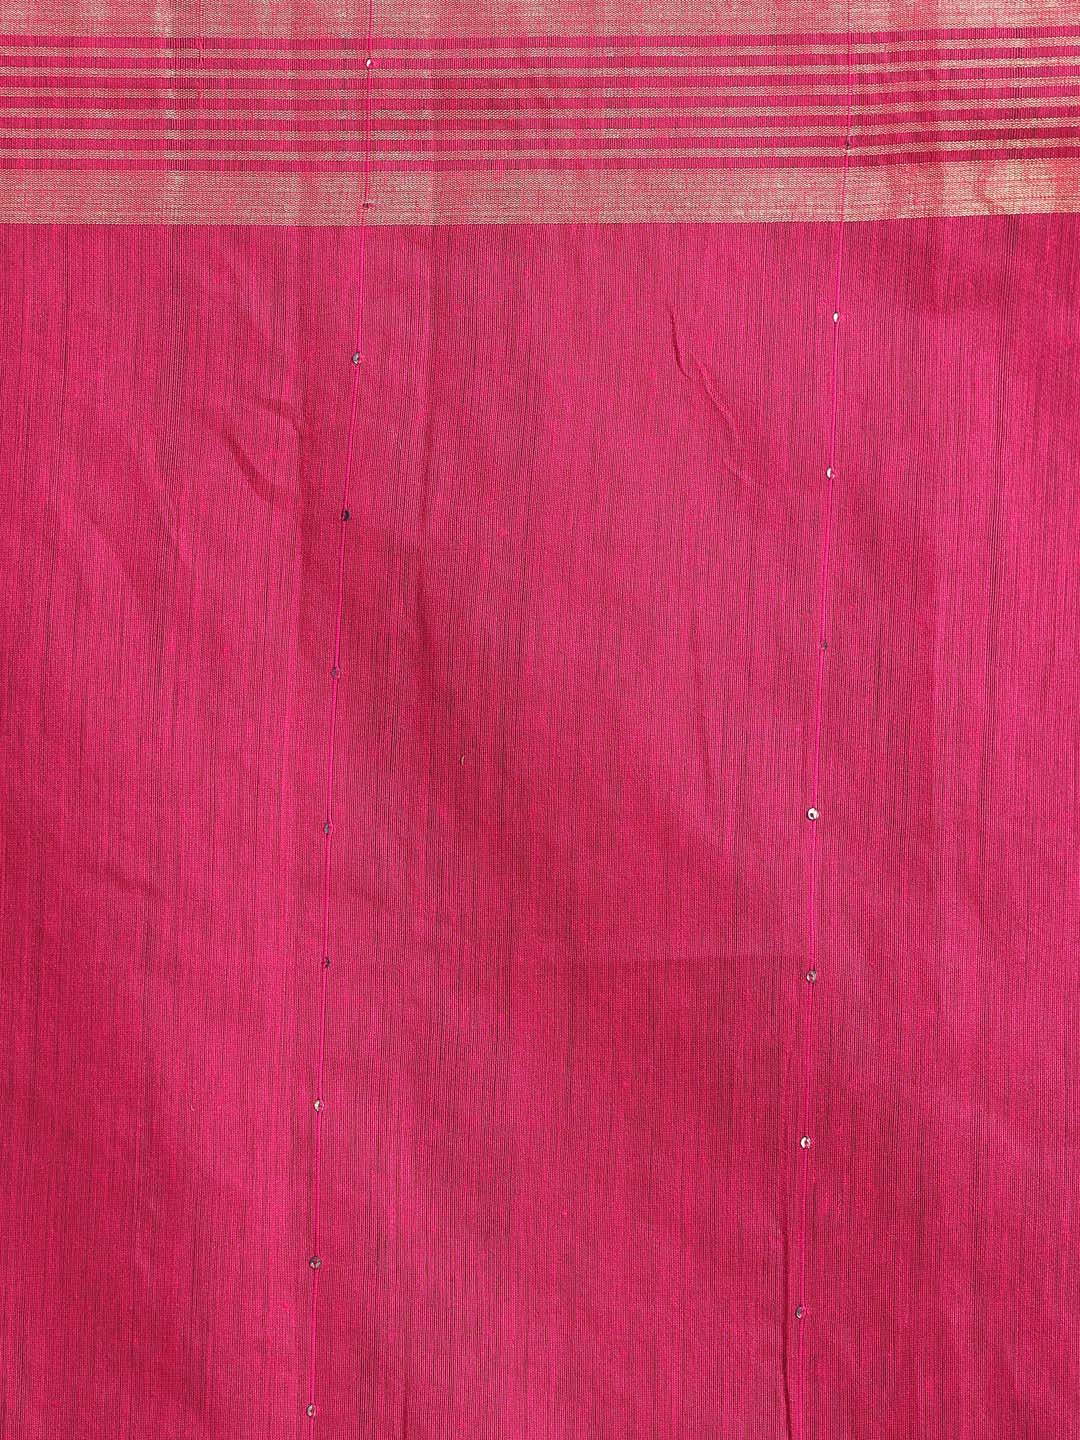 Indethnic Pink Bengal Handloom Cotton Blend Party Saree - Saree Detail View